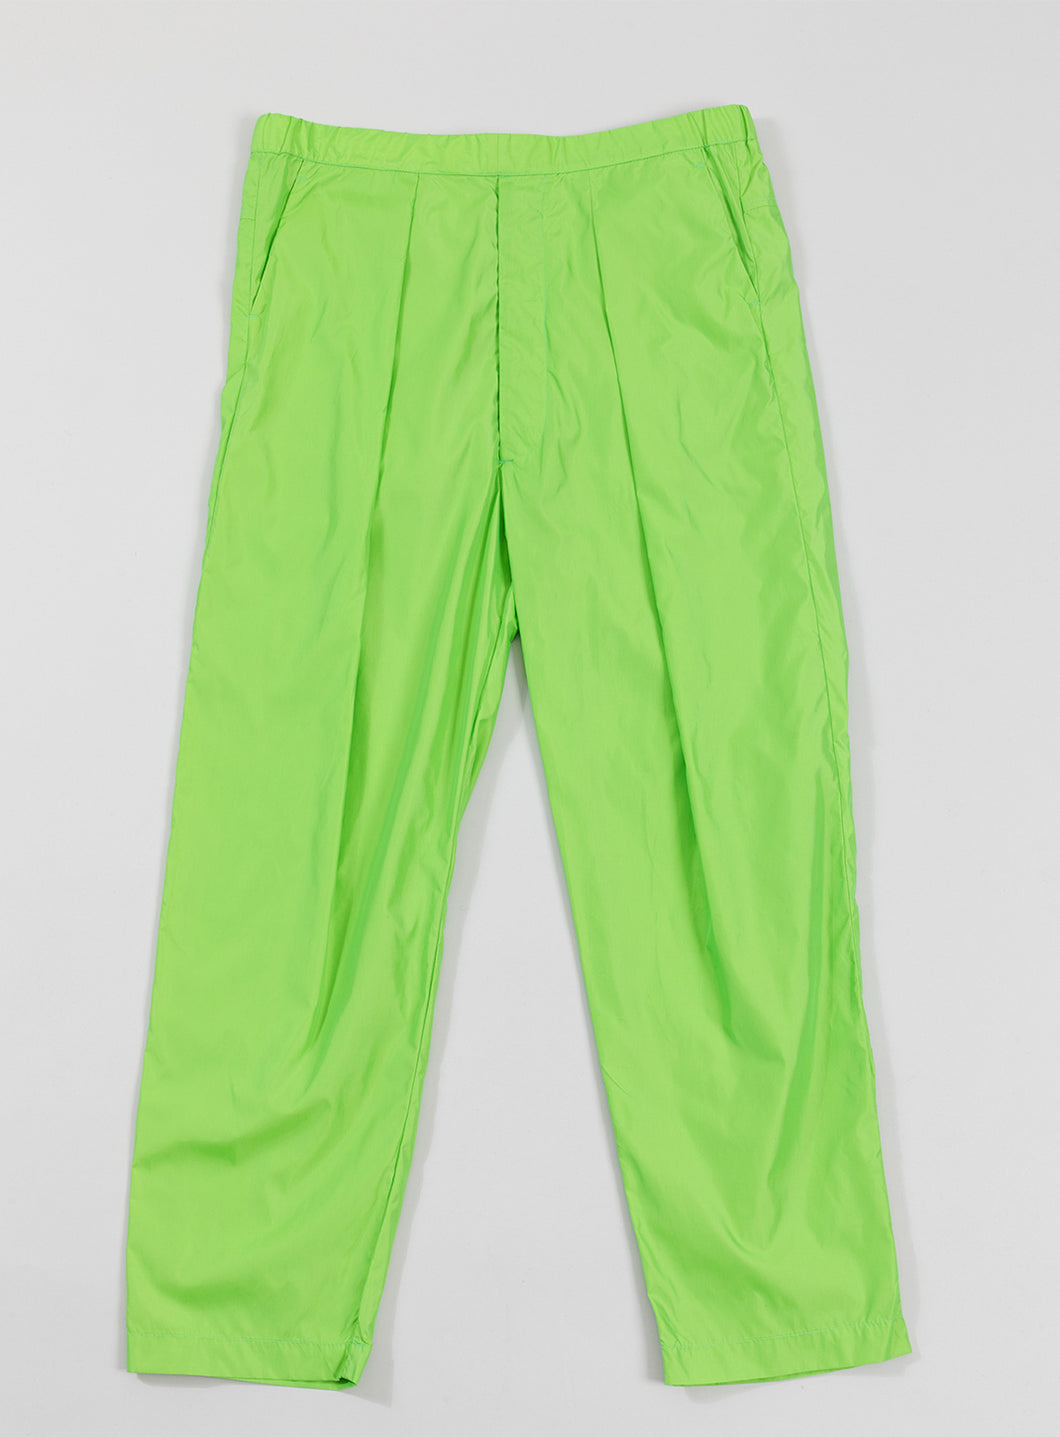 Elastic Waist Pants with Deep Pleats in Lime Green Nylon